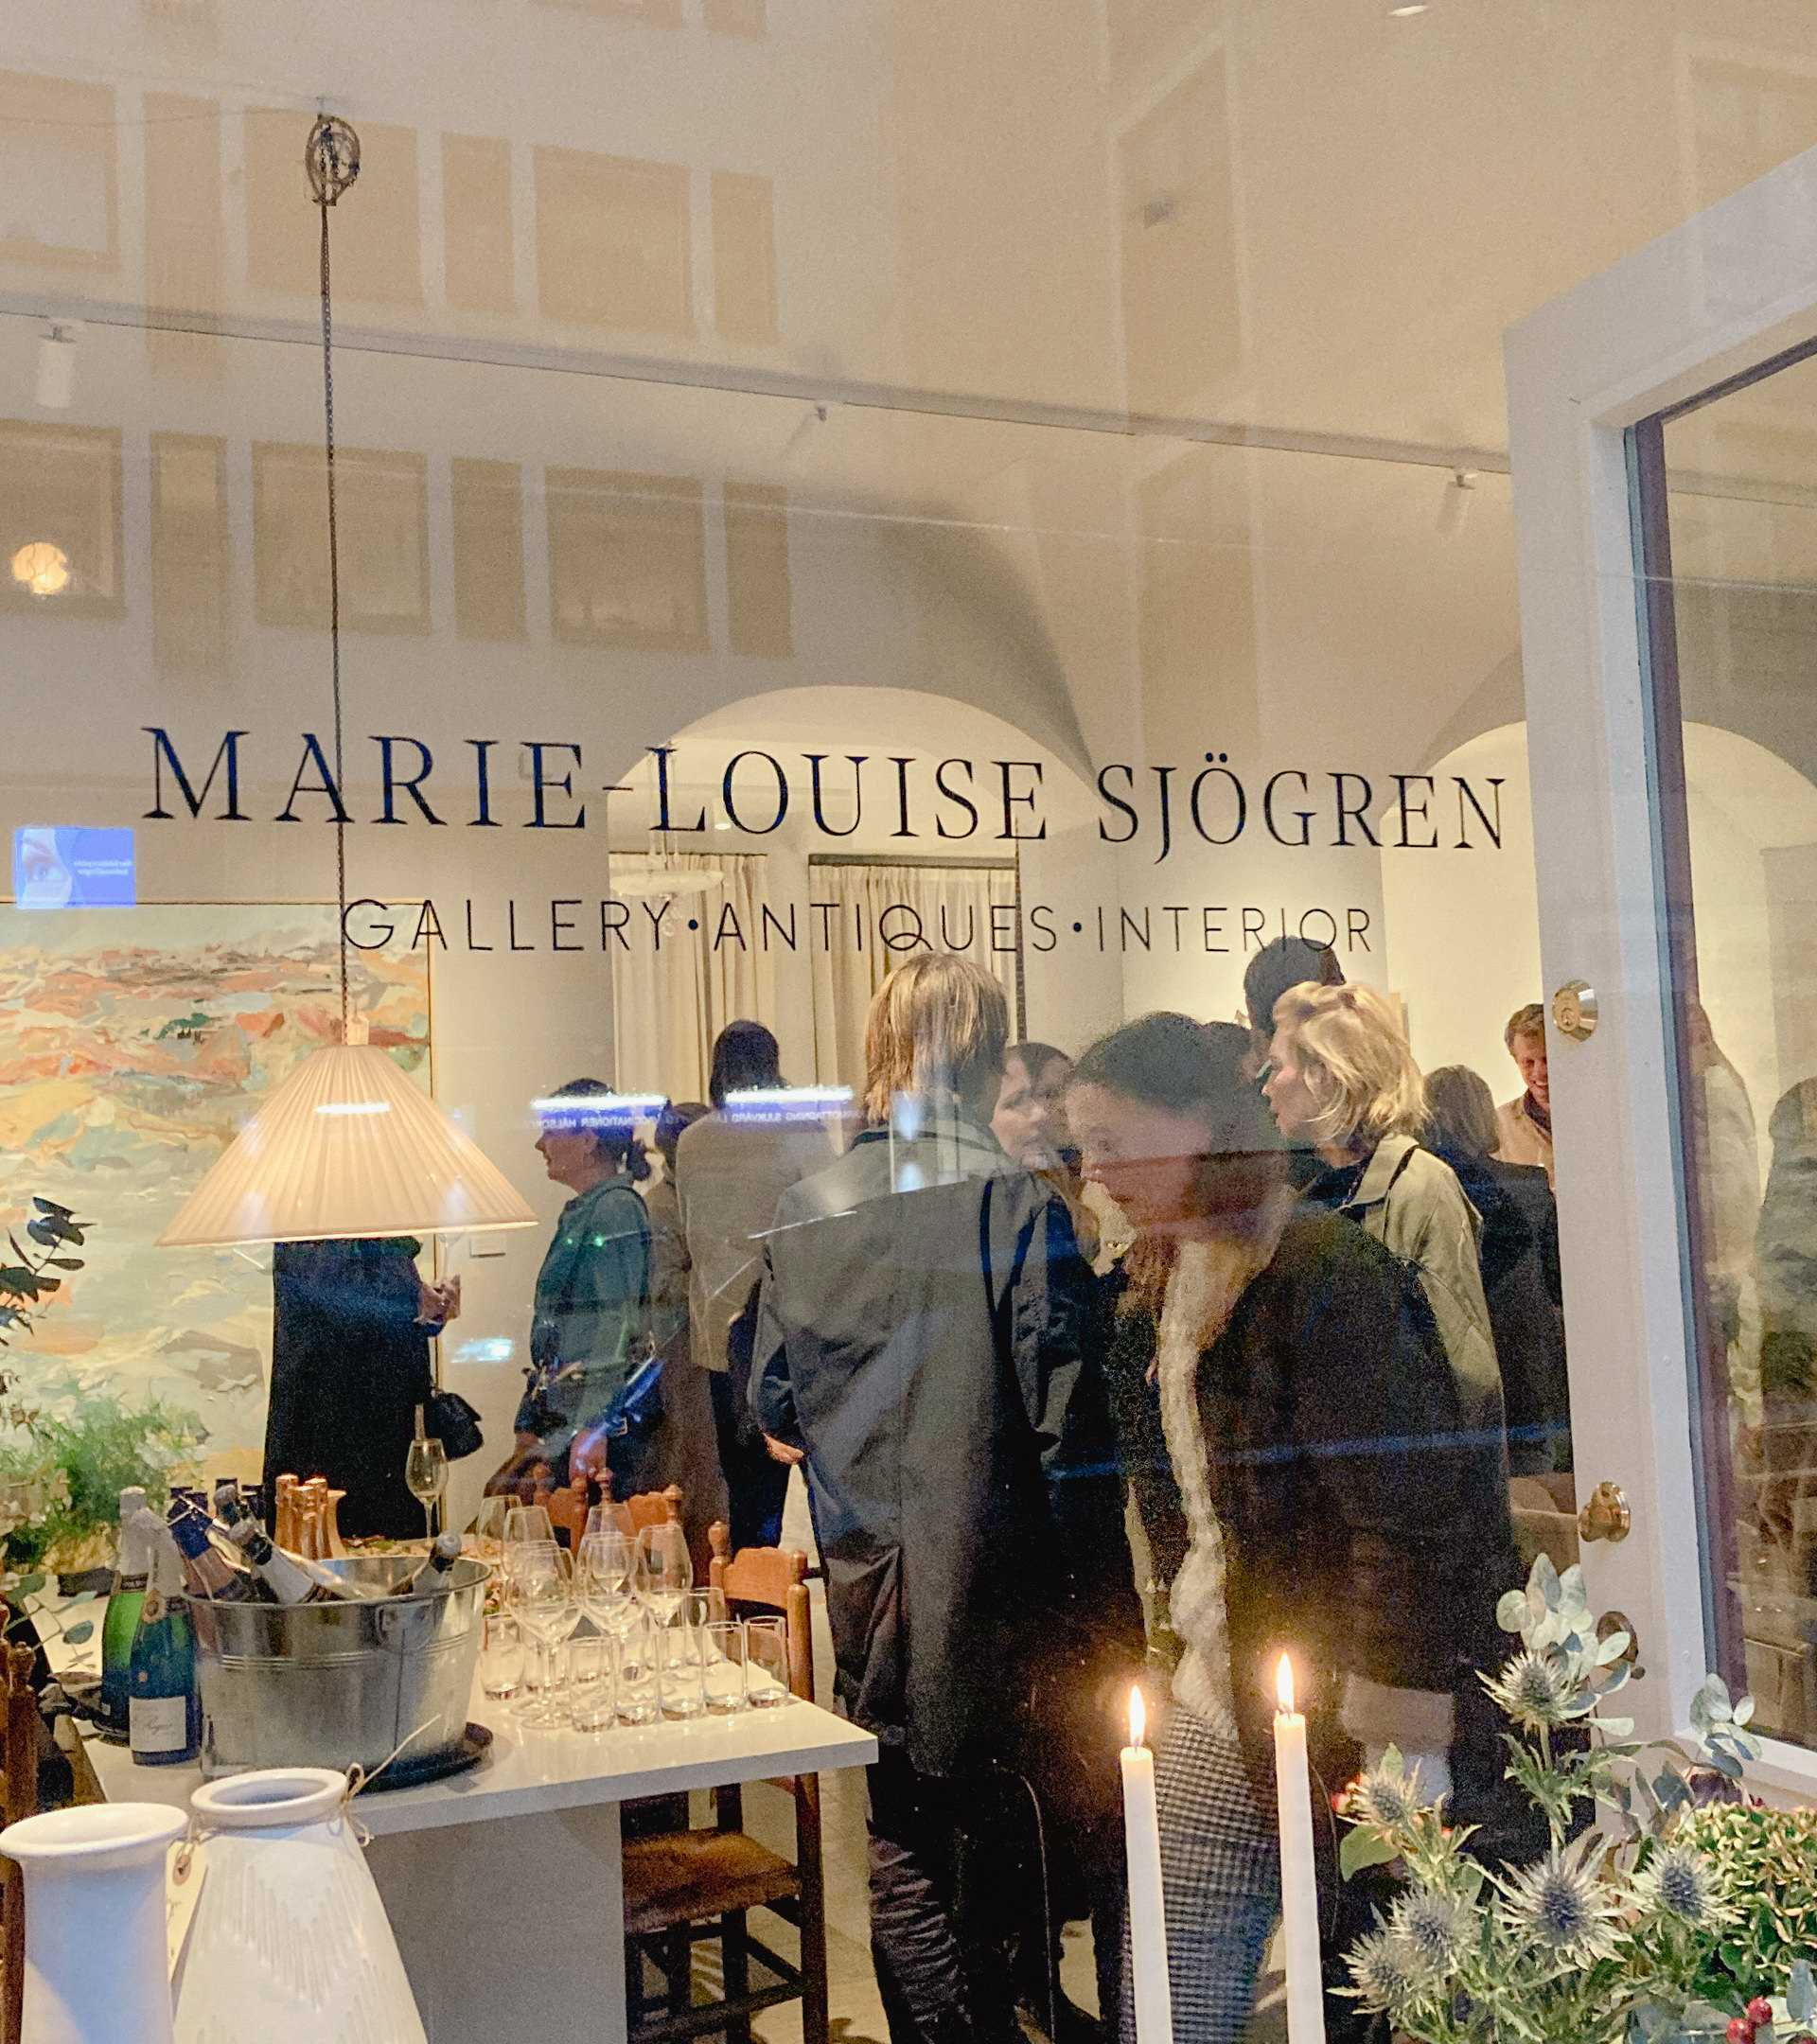 Gallery viewing in the Marie-Louise Sjögren store